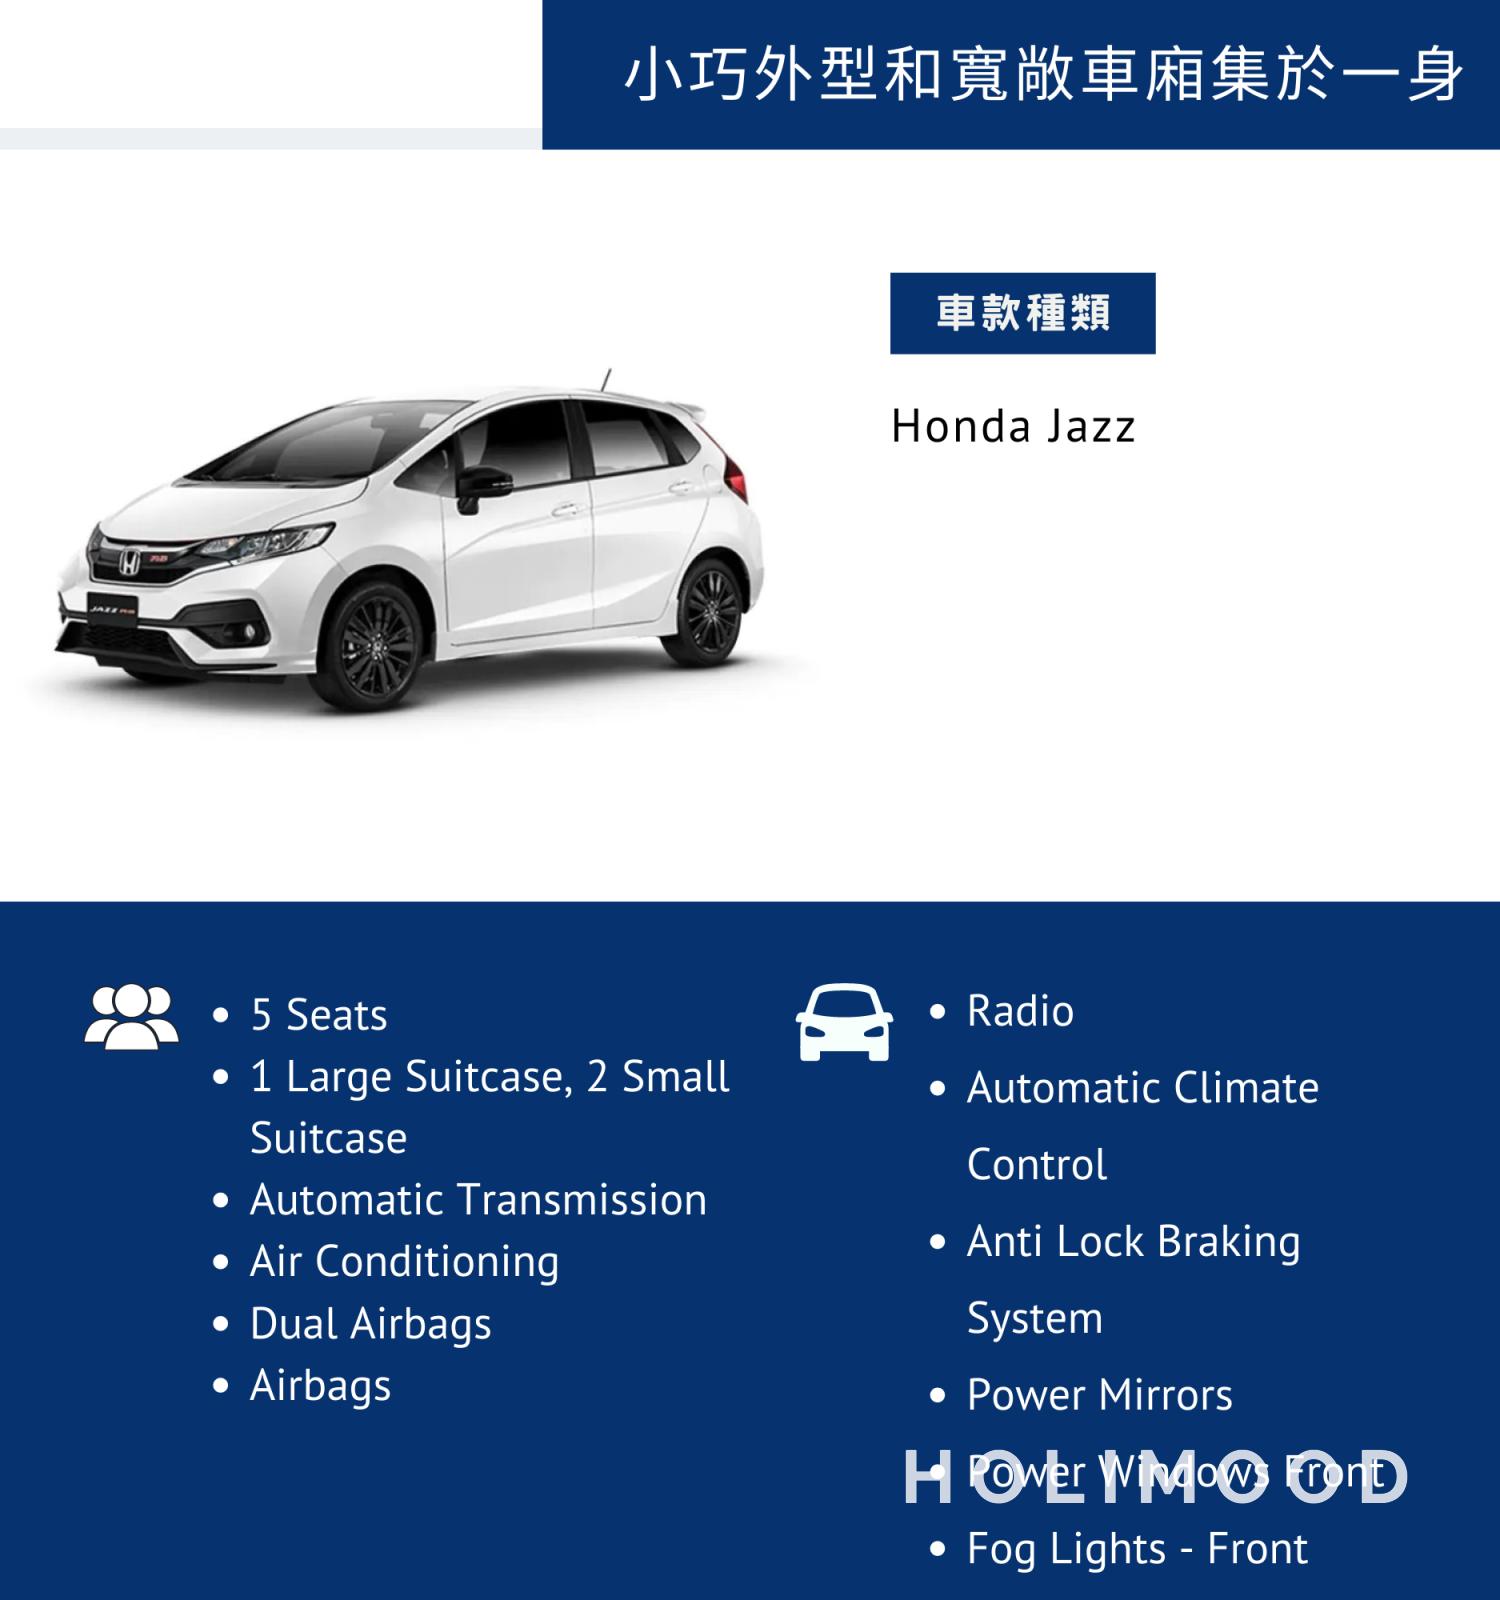 DCH Mobility Car Rent x Holimood Promotion 【車身小巧】Honda Jazz - 實用慳油5人車 (日租) 1